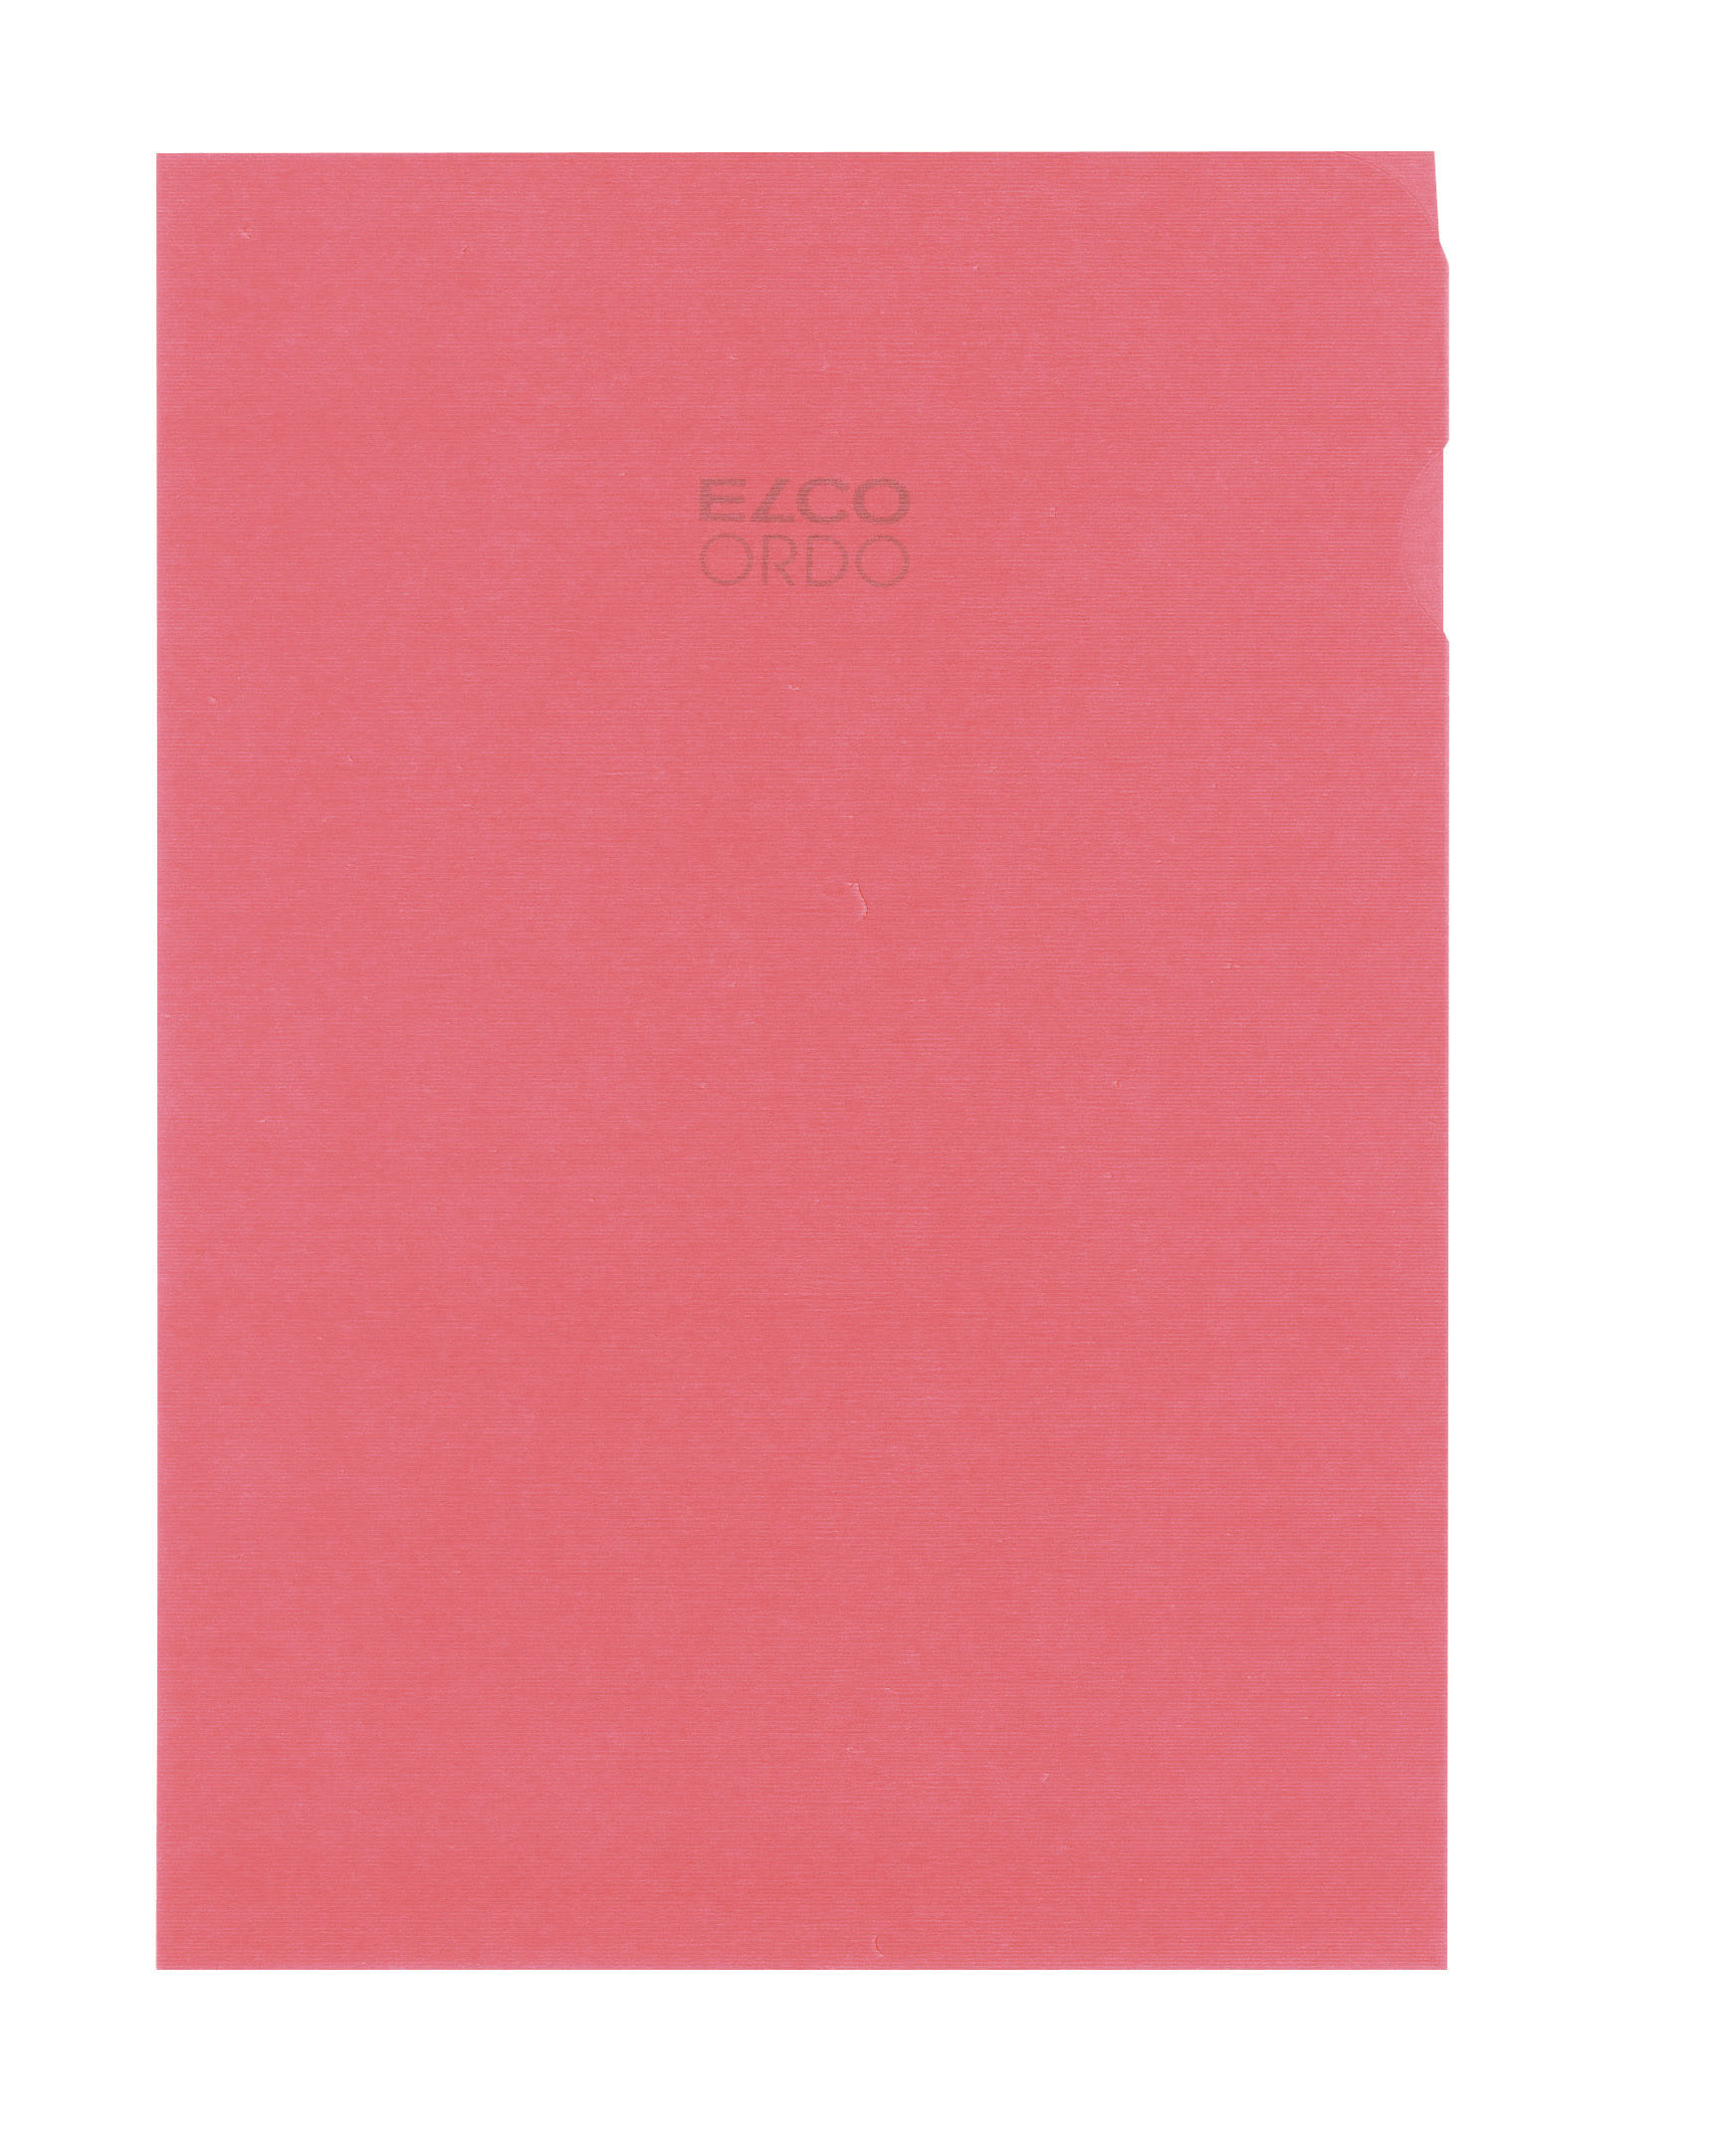 ELCO Dossier Ordo A4 29490.94 transparent, rouge 100 pièces